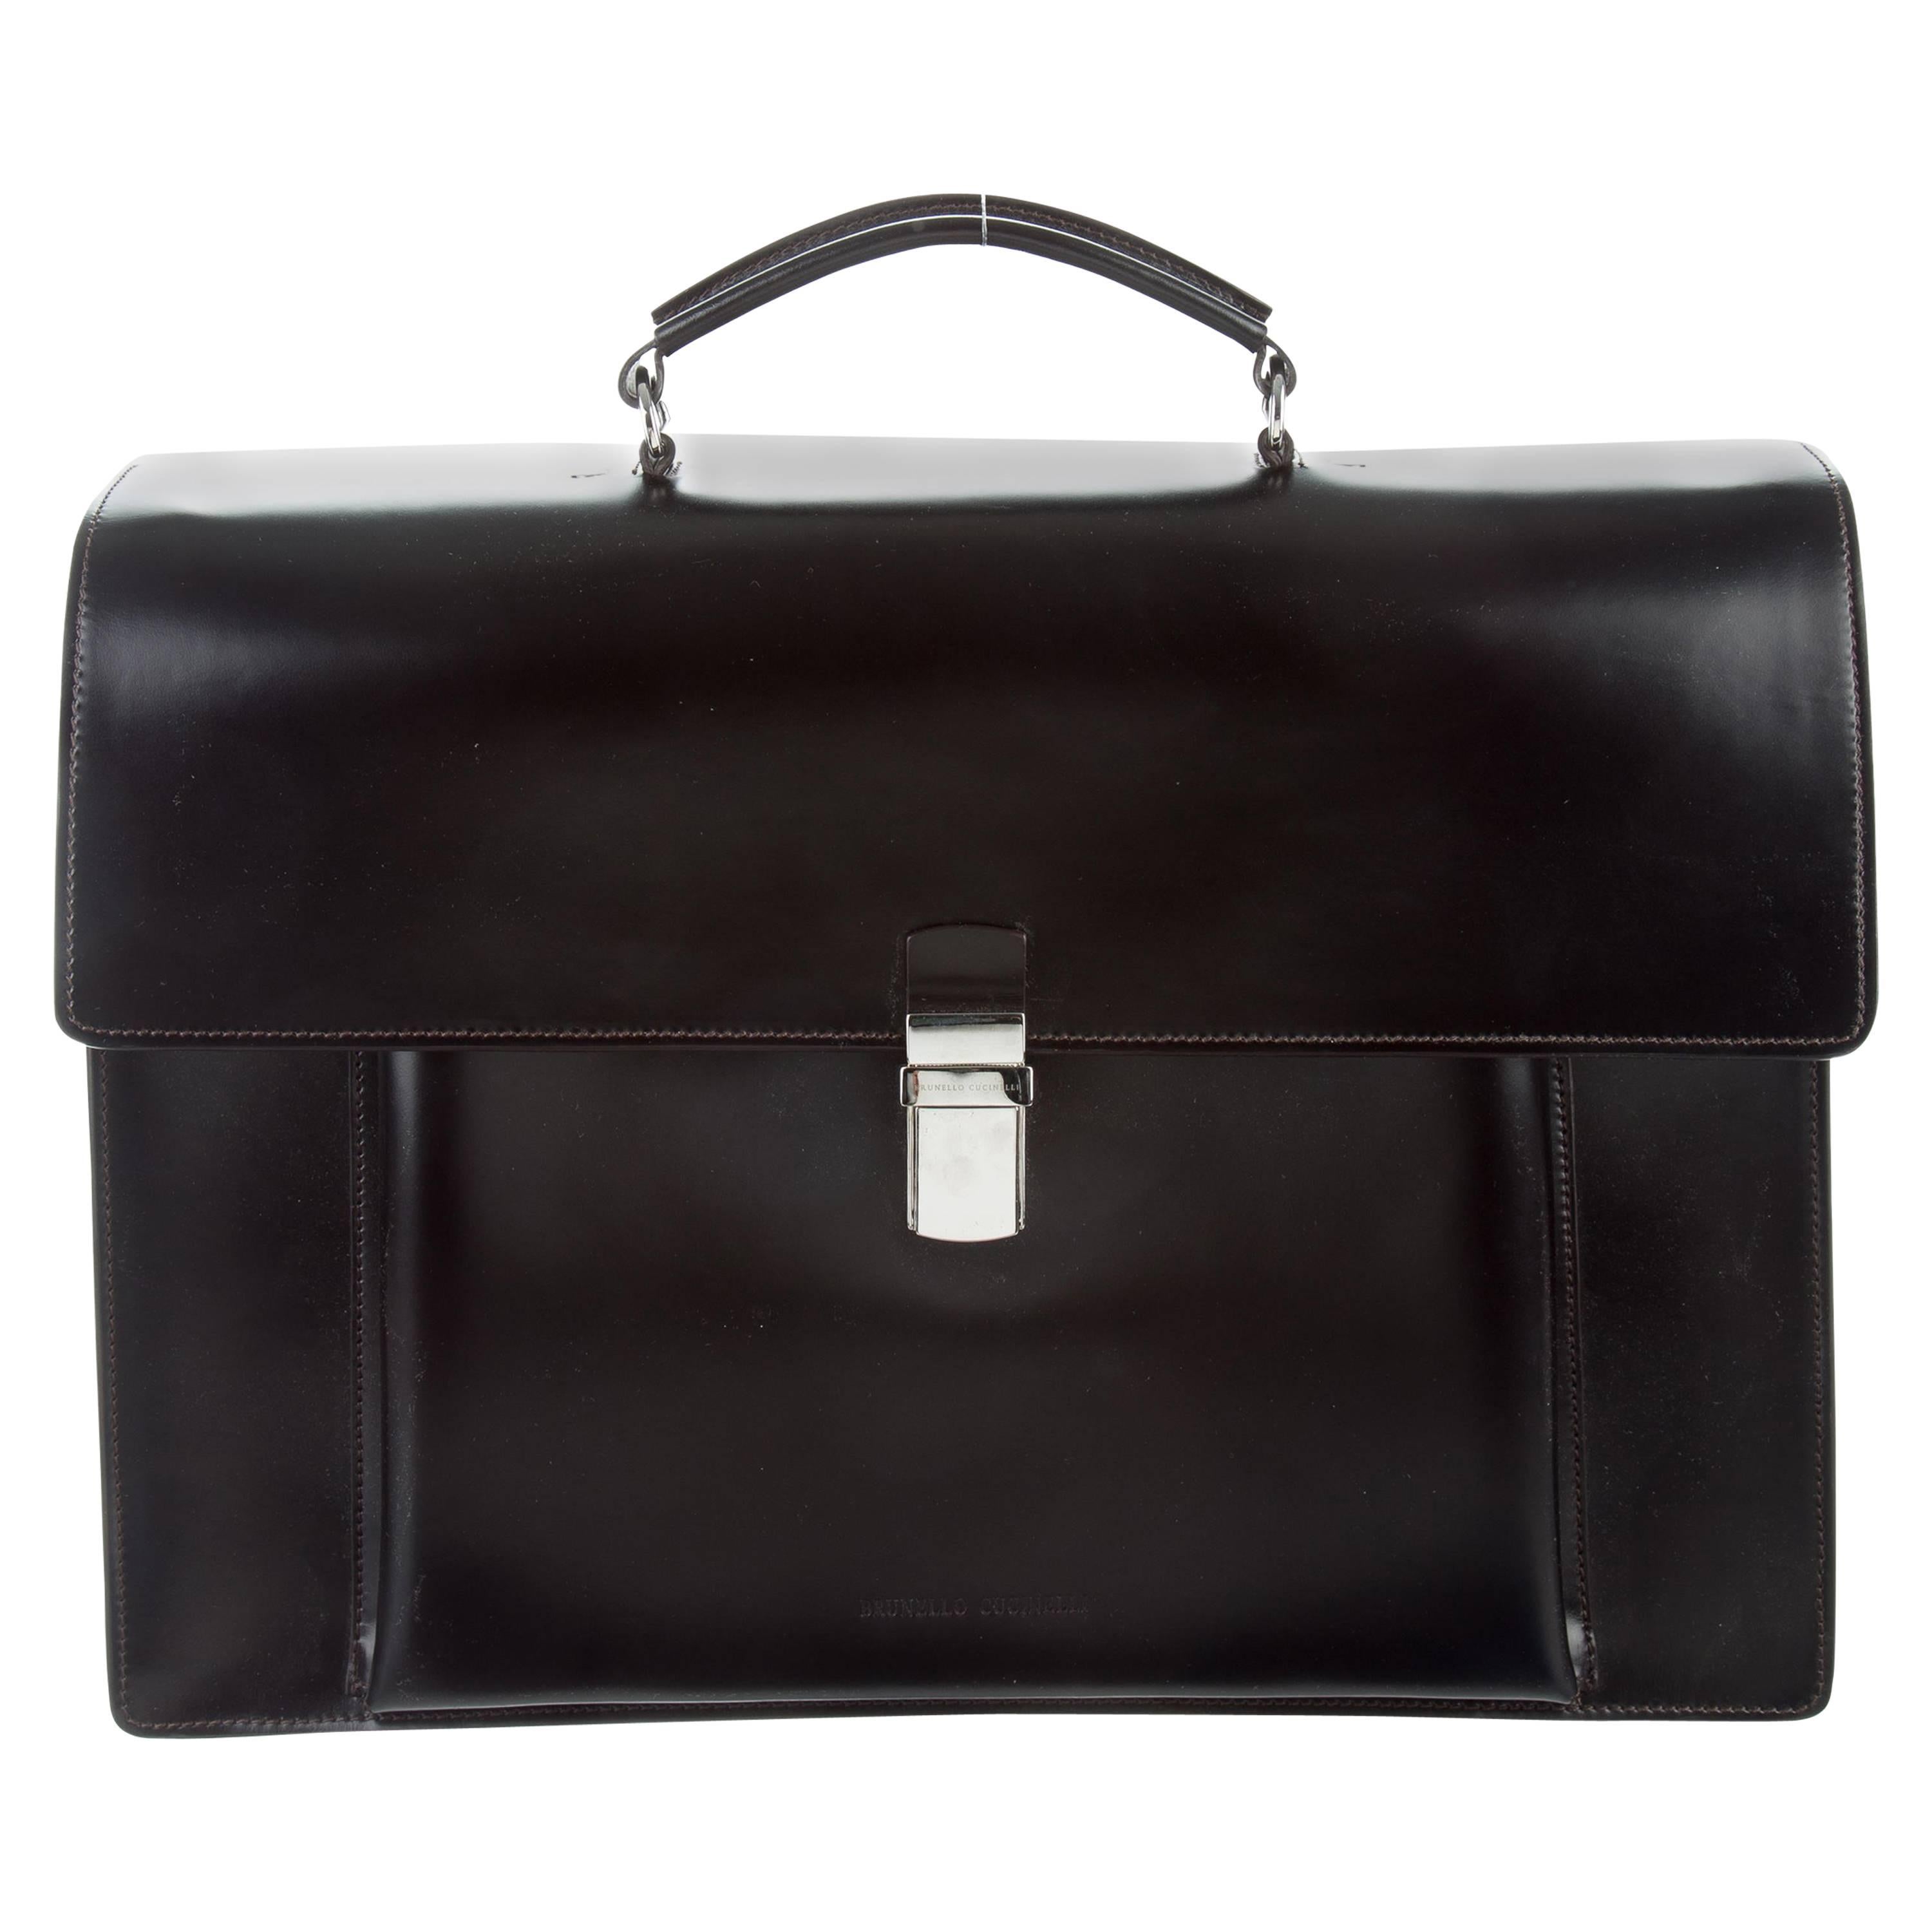 Brunello Cucinelli New Black Leather Silver Men's Travel Business Case Tote Bag